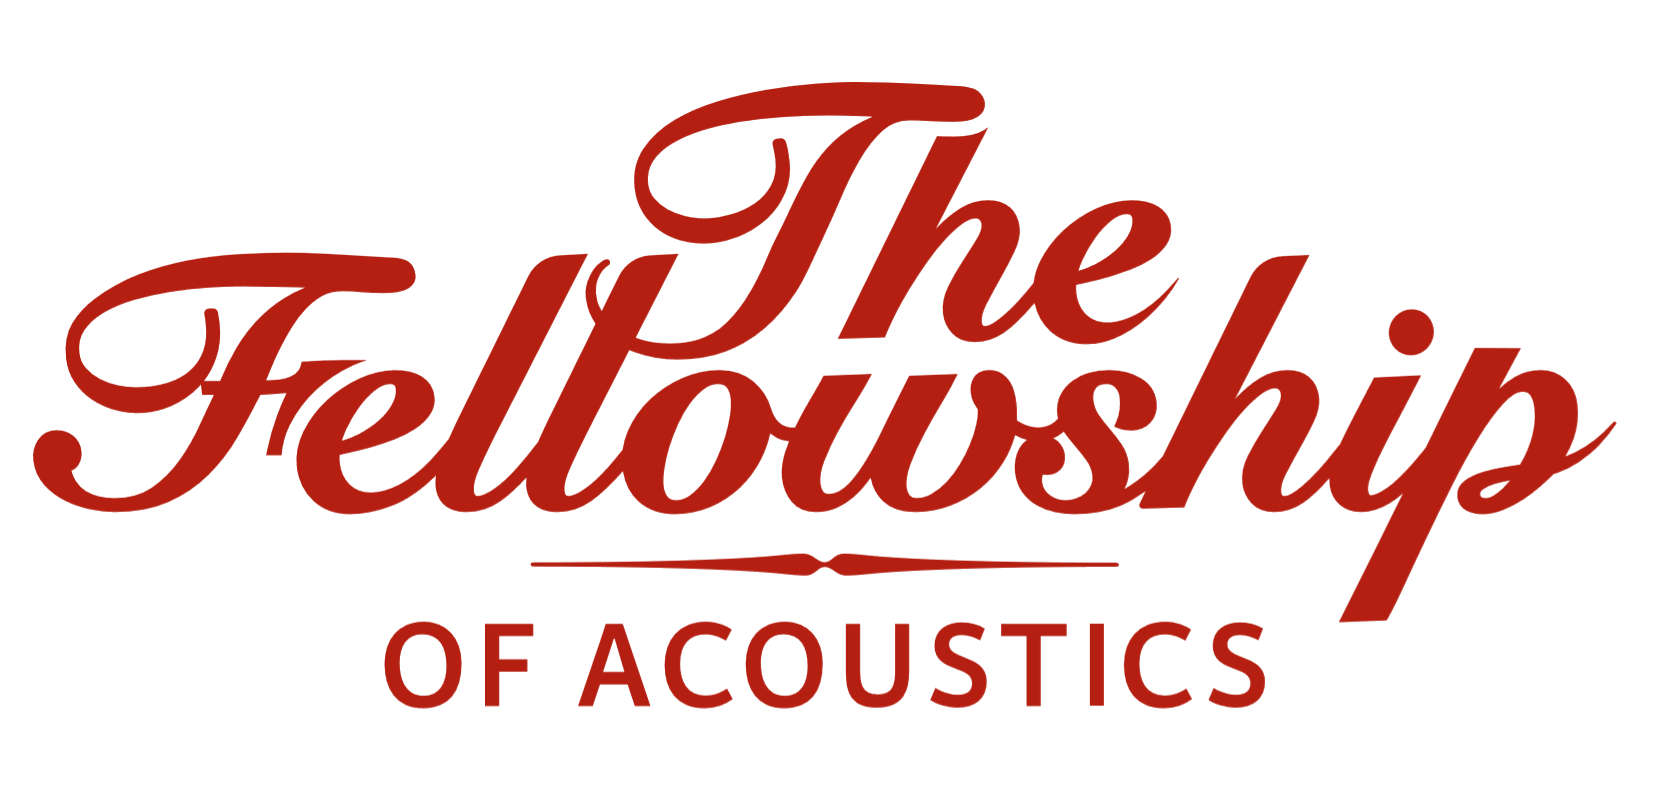 The Fellowship of Acoustics